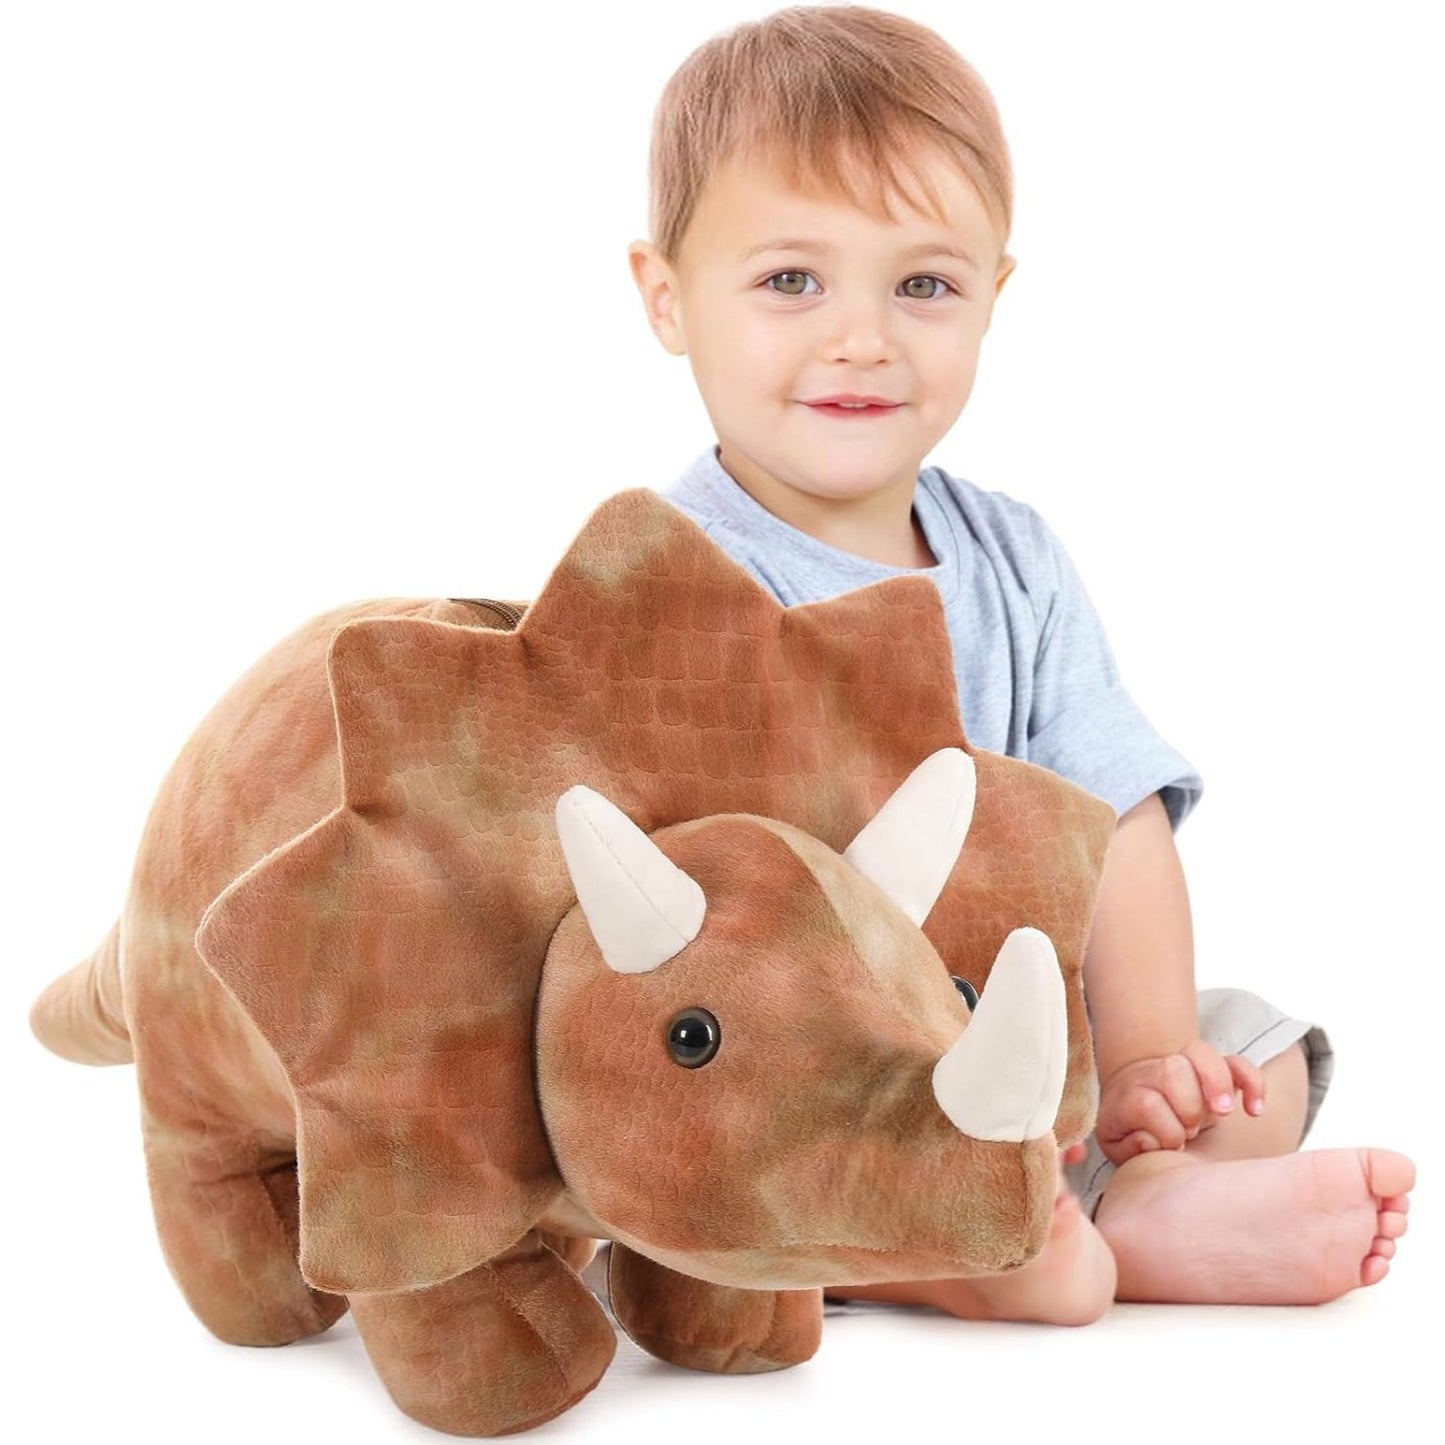 Dinosaur Plush Toy Triceratops Stuffed Toy, 24.5 Inches - MorisMos Stuffed Animals